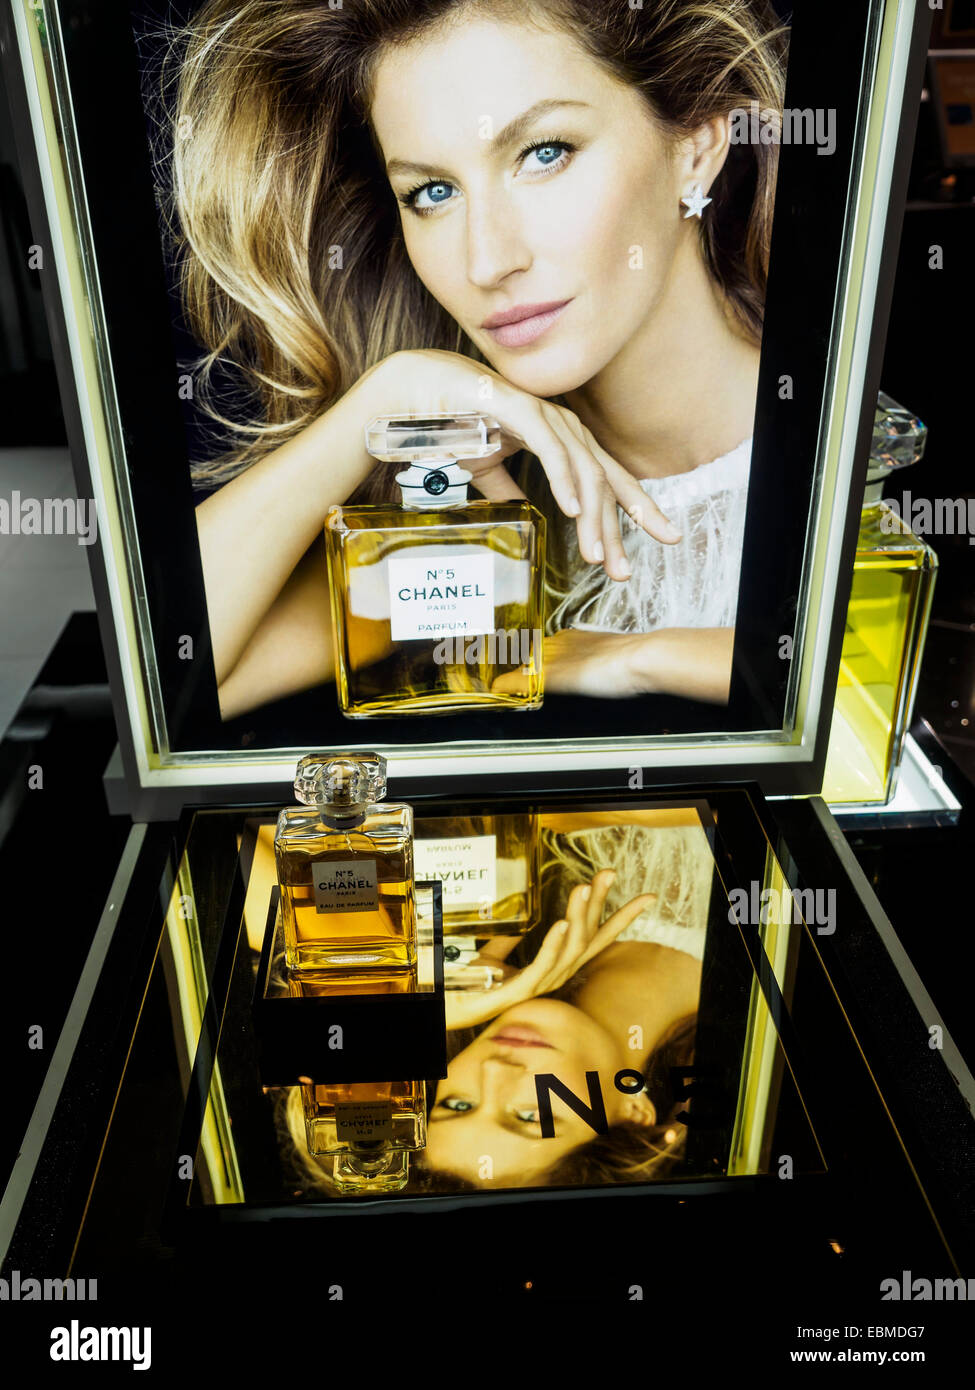 Chanel no 5 perfume bottle ad with Gisele Bundchen Stock Photo